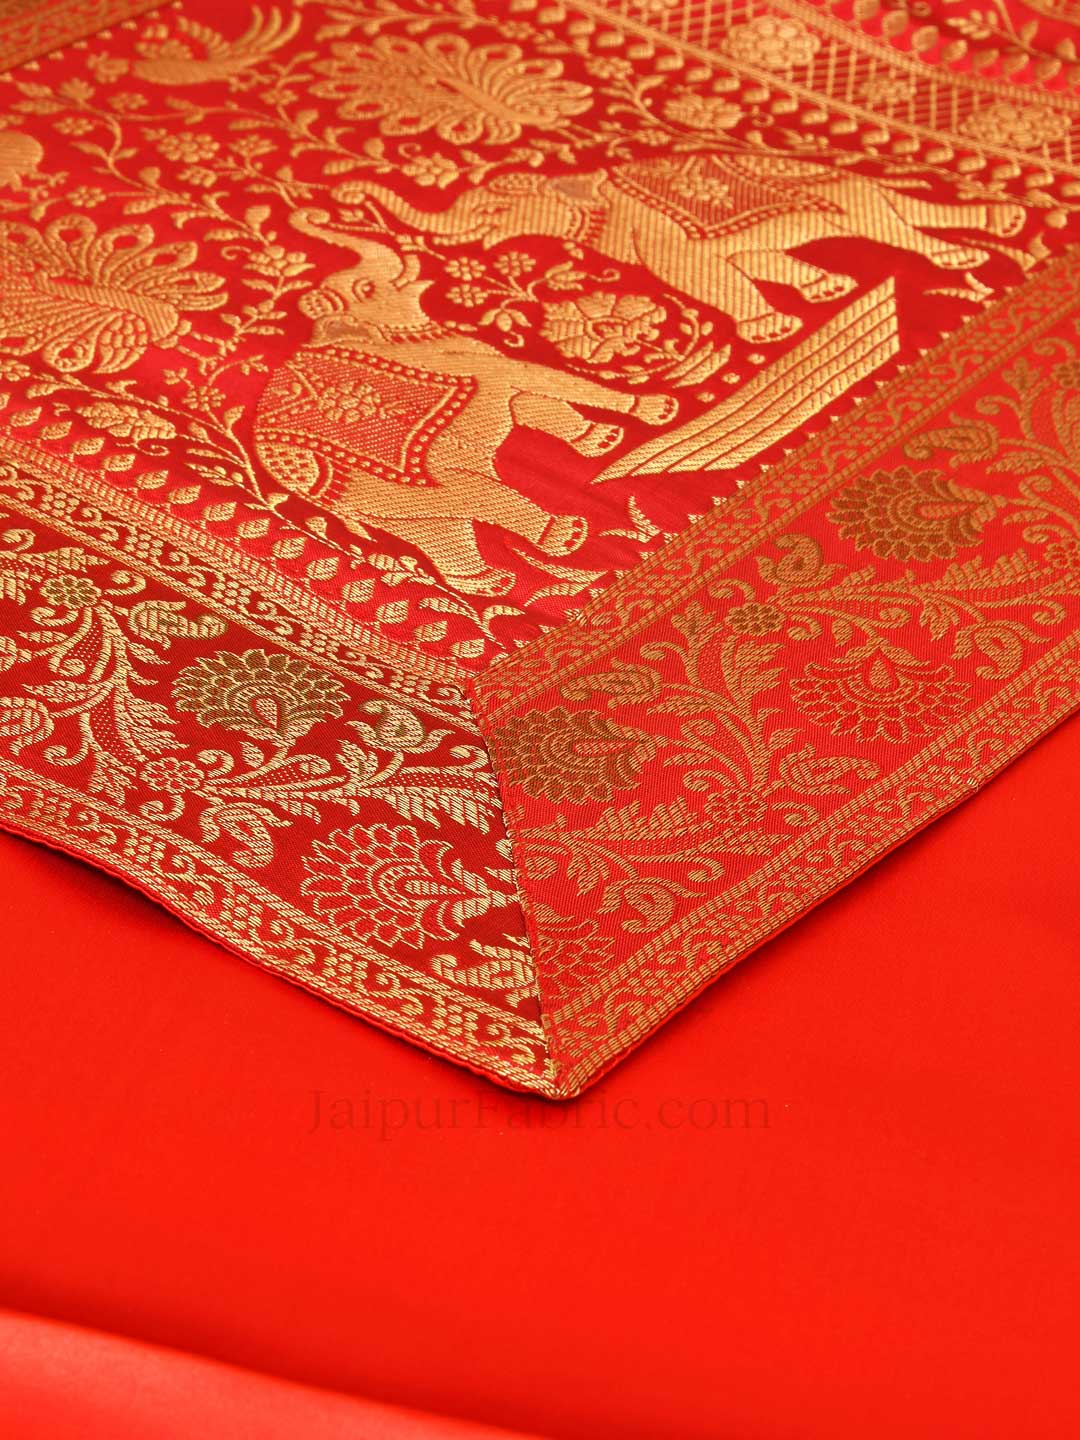 Royal Elephants Red Silk Table Runner